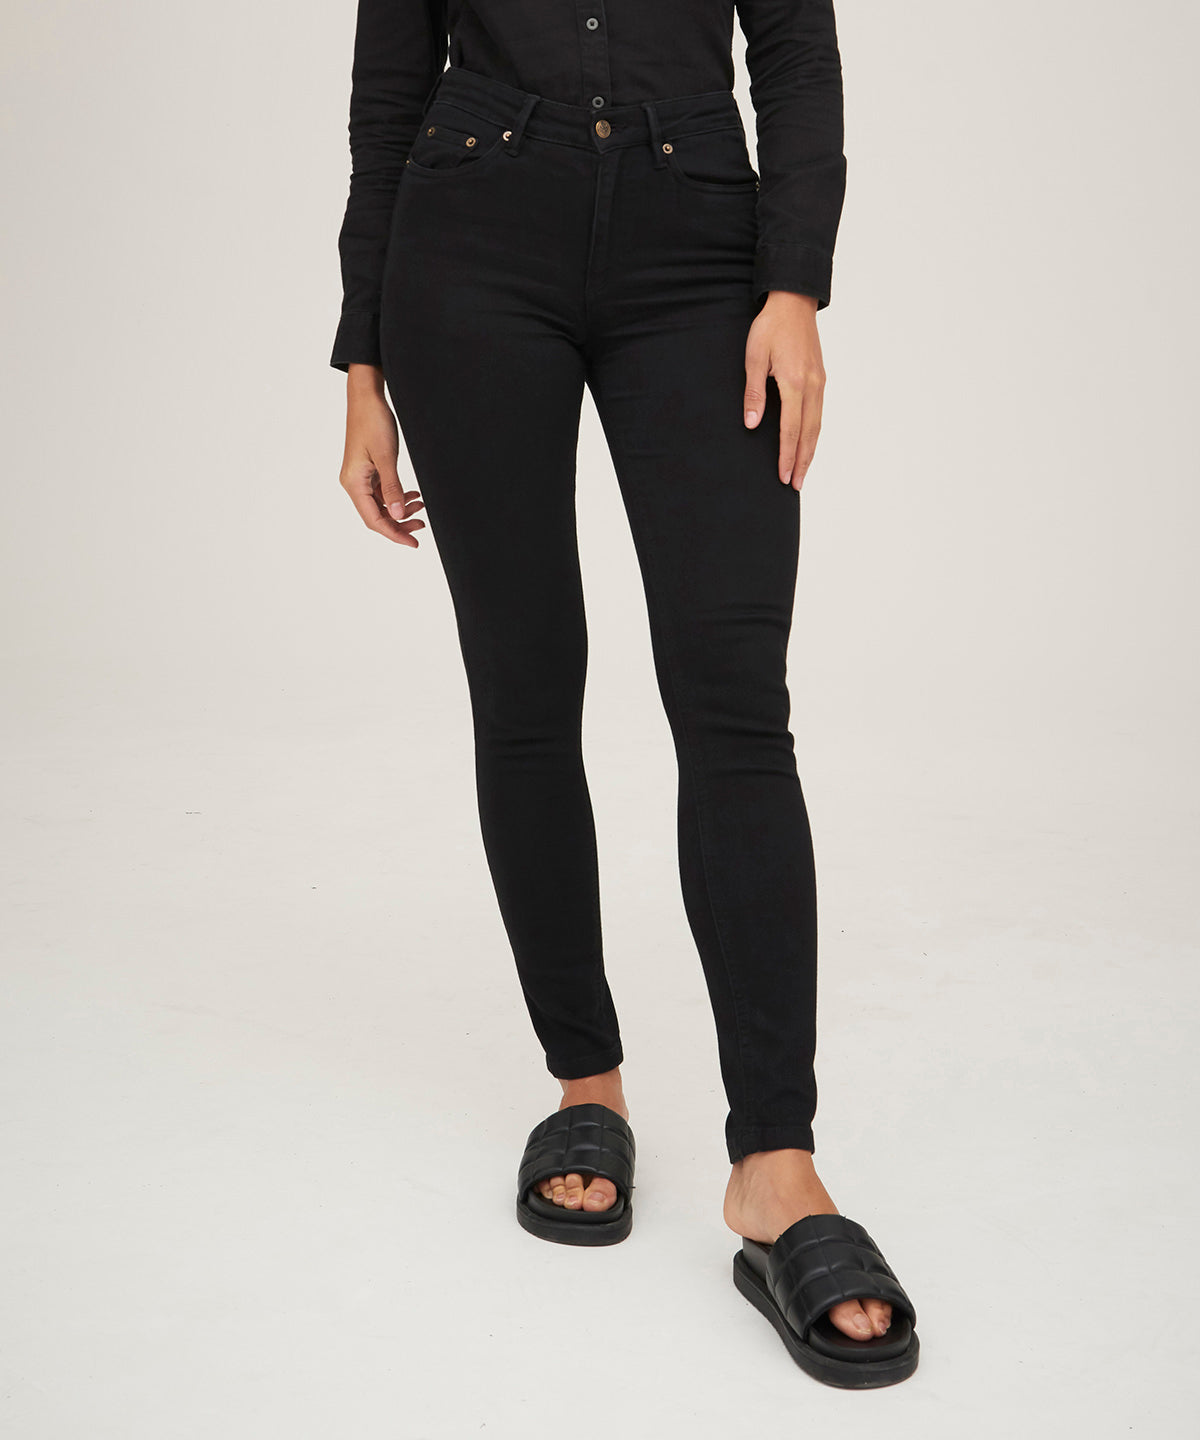 Buxur - Women's Lara Skinny Jeans